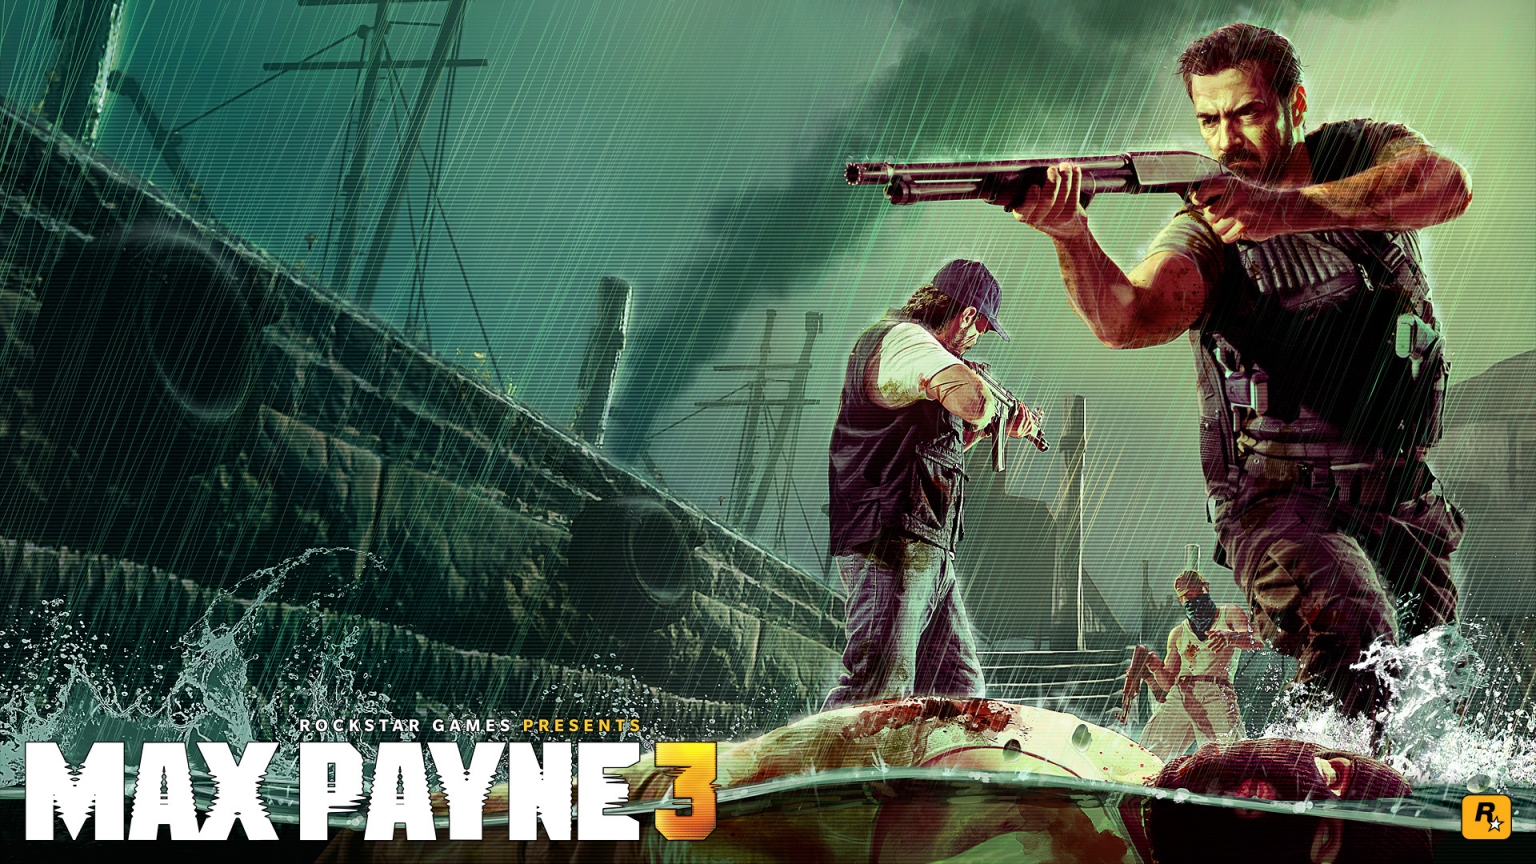 Rockstar Max Payne 3 for 1536 x 864 HDTV resolution